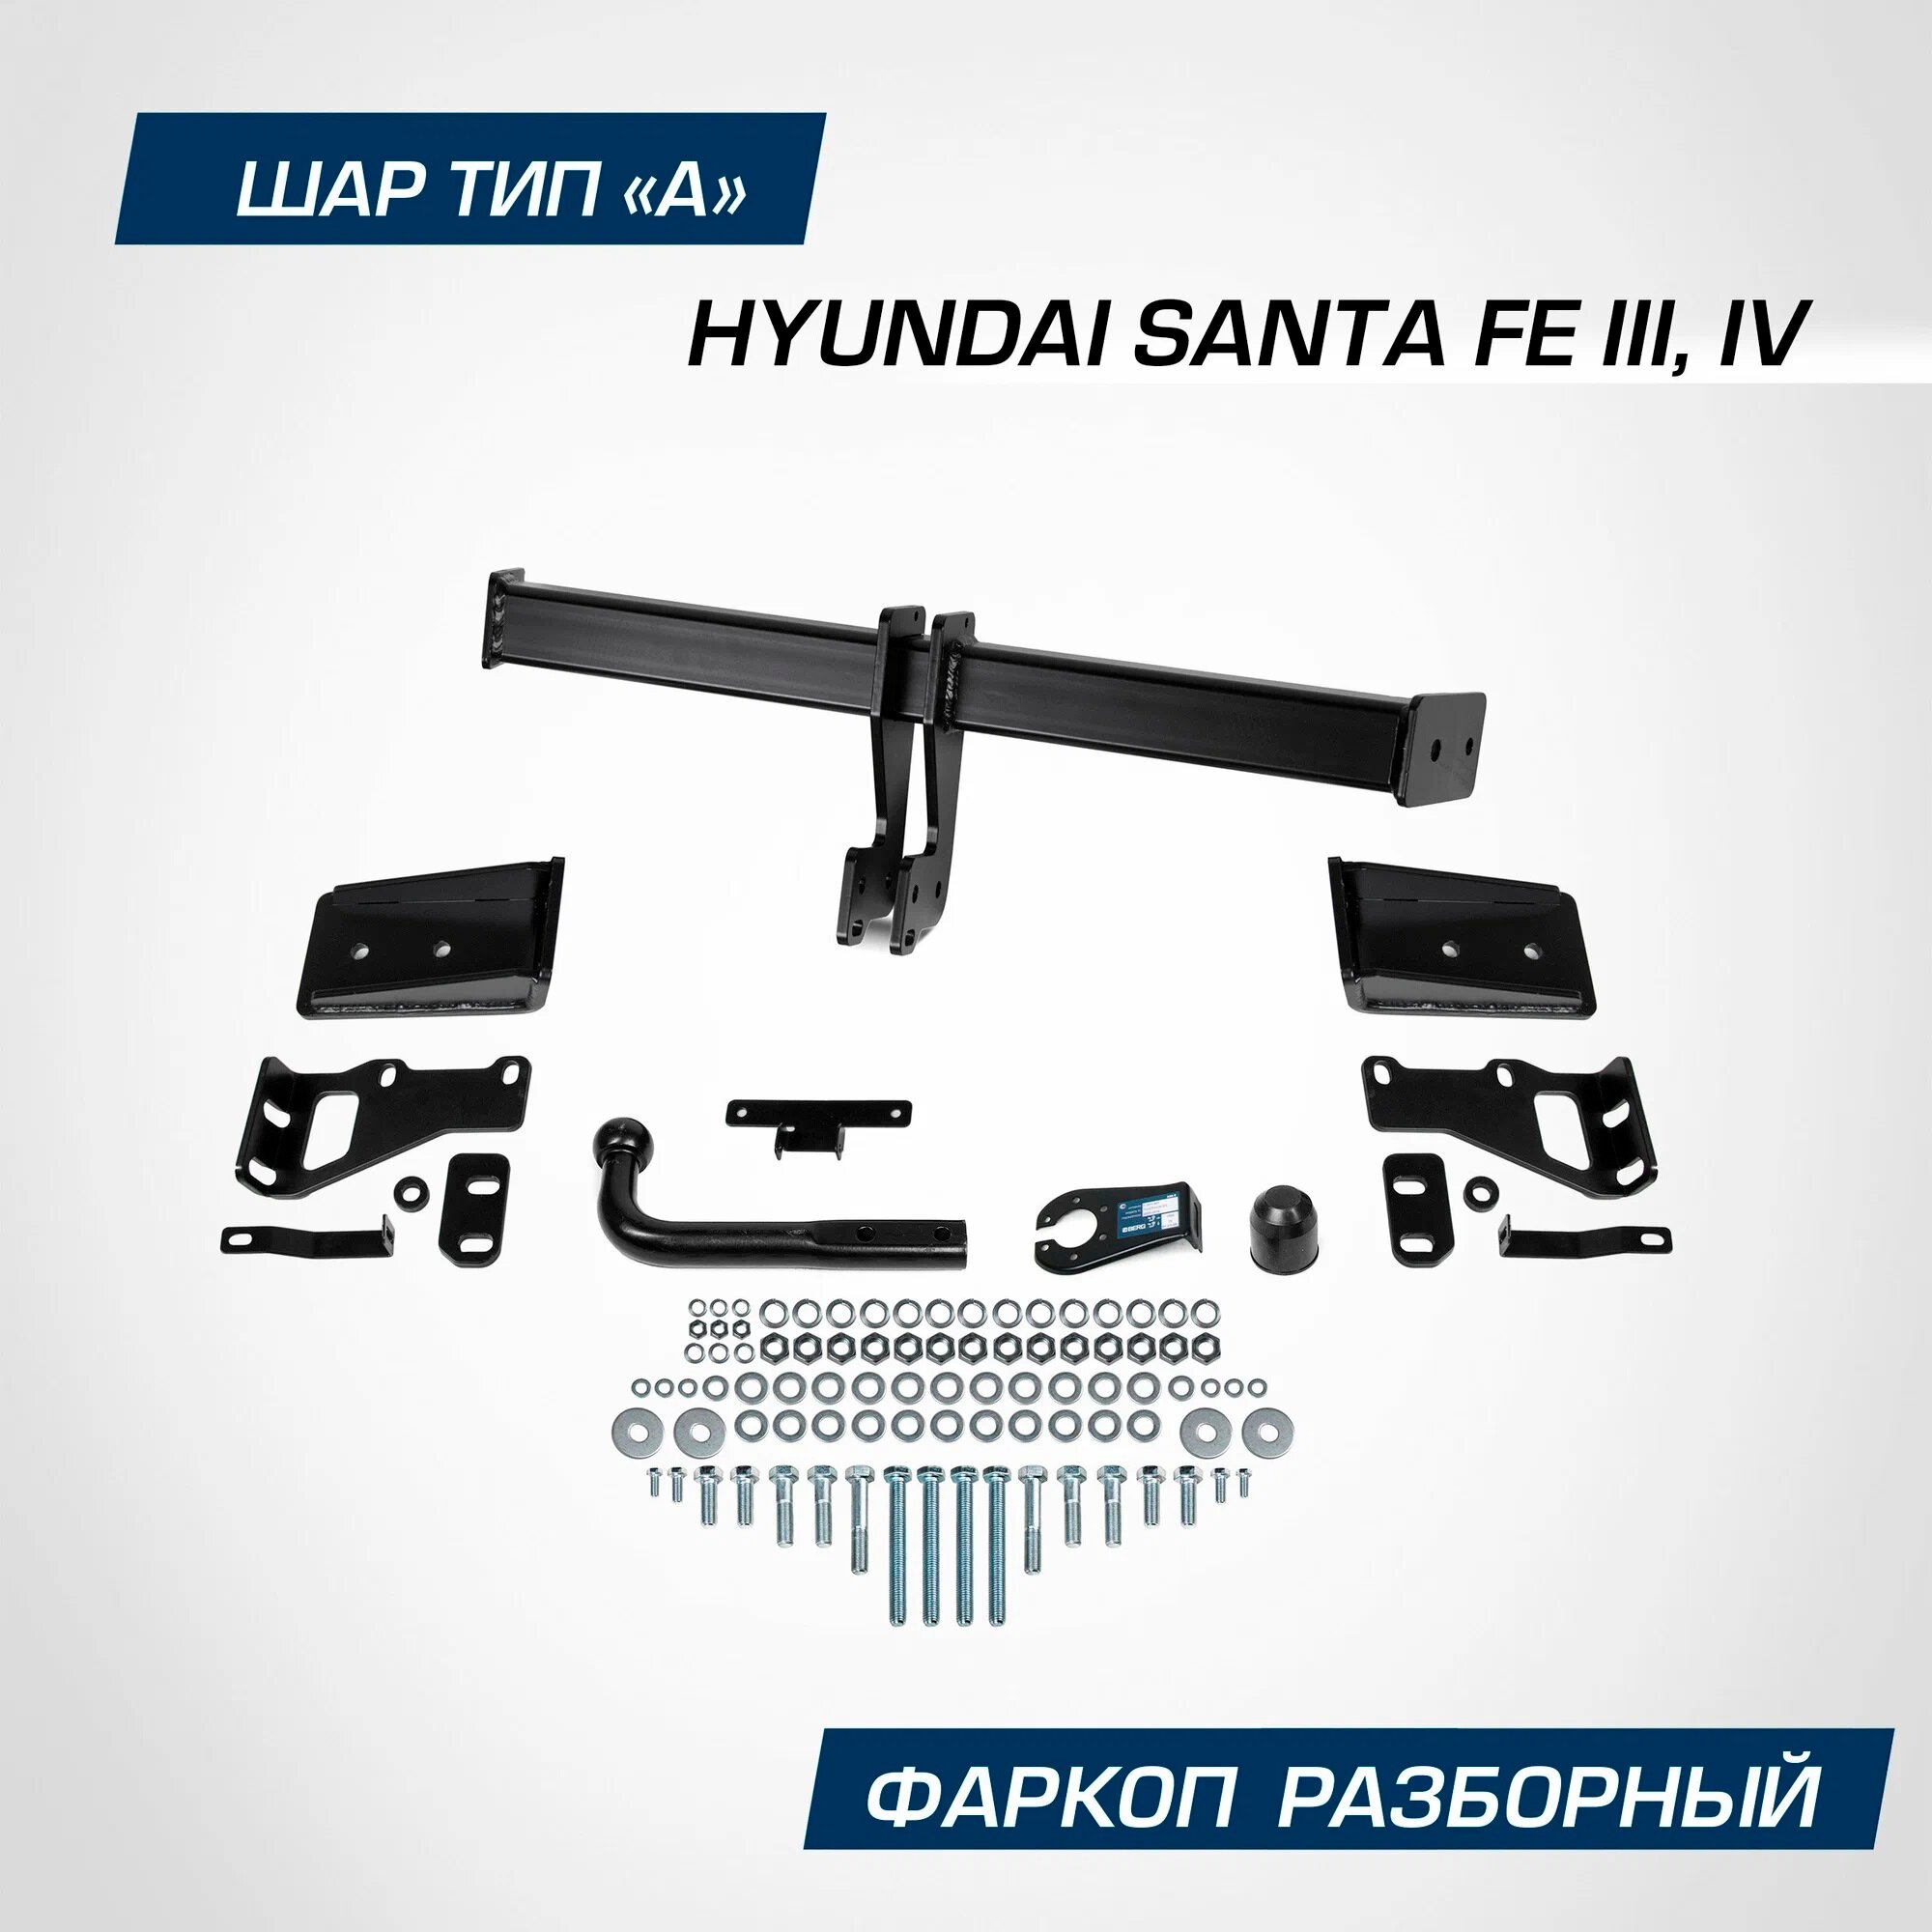 Фаркоп Berg для Hyundai Santa Fe III, IV поколение 2012-2018 2018-2020, шар А, 2500/100 кг, F.2316.001